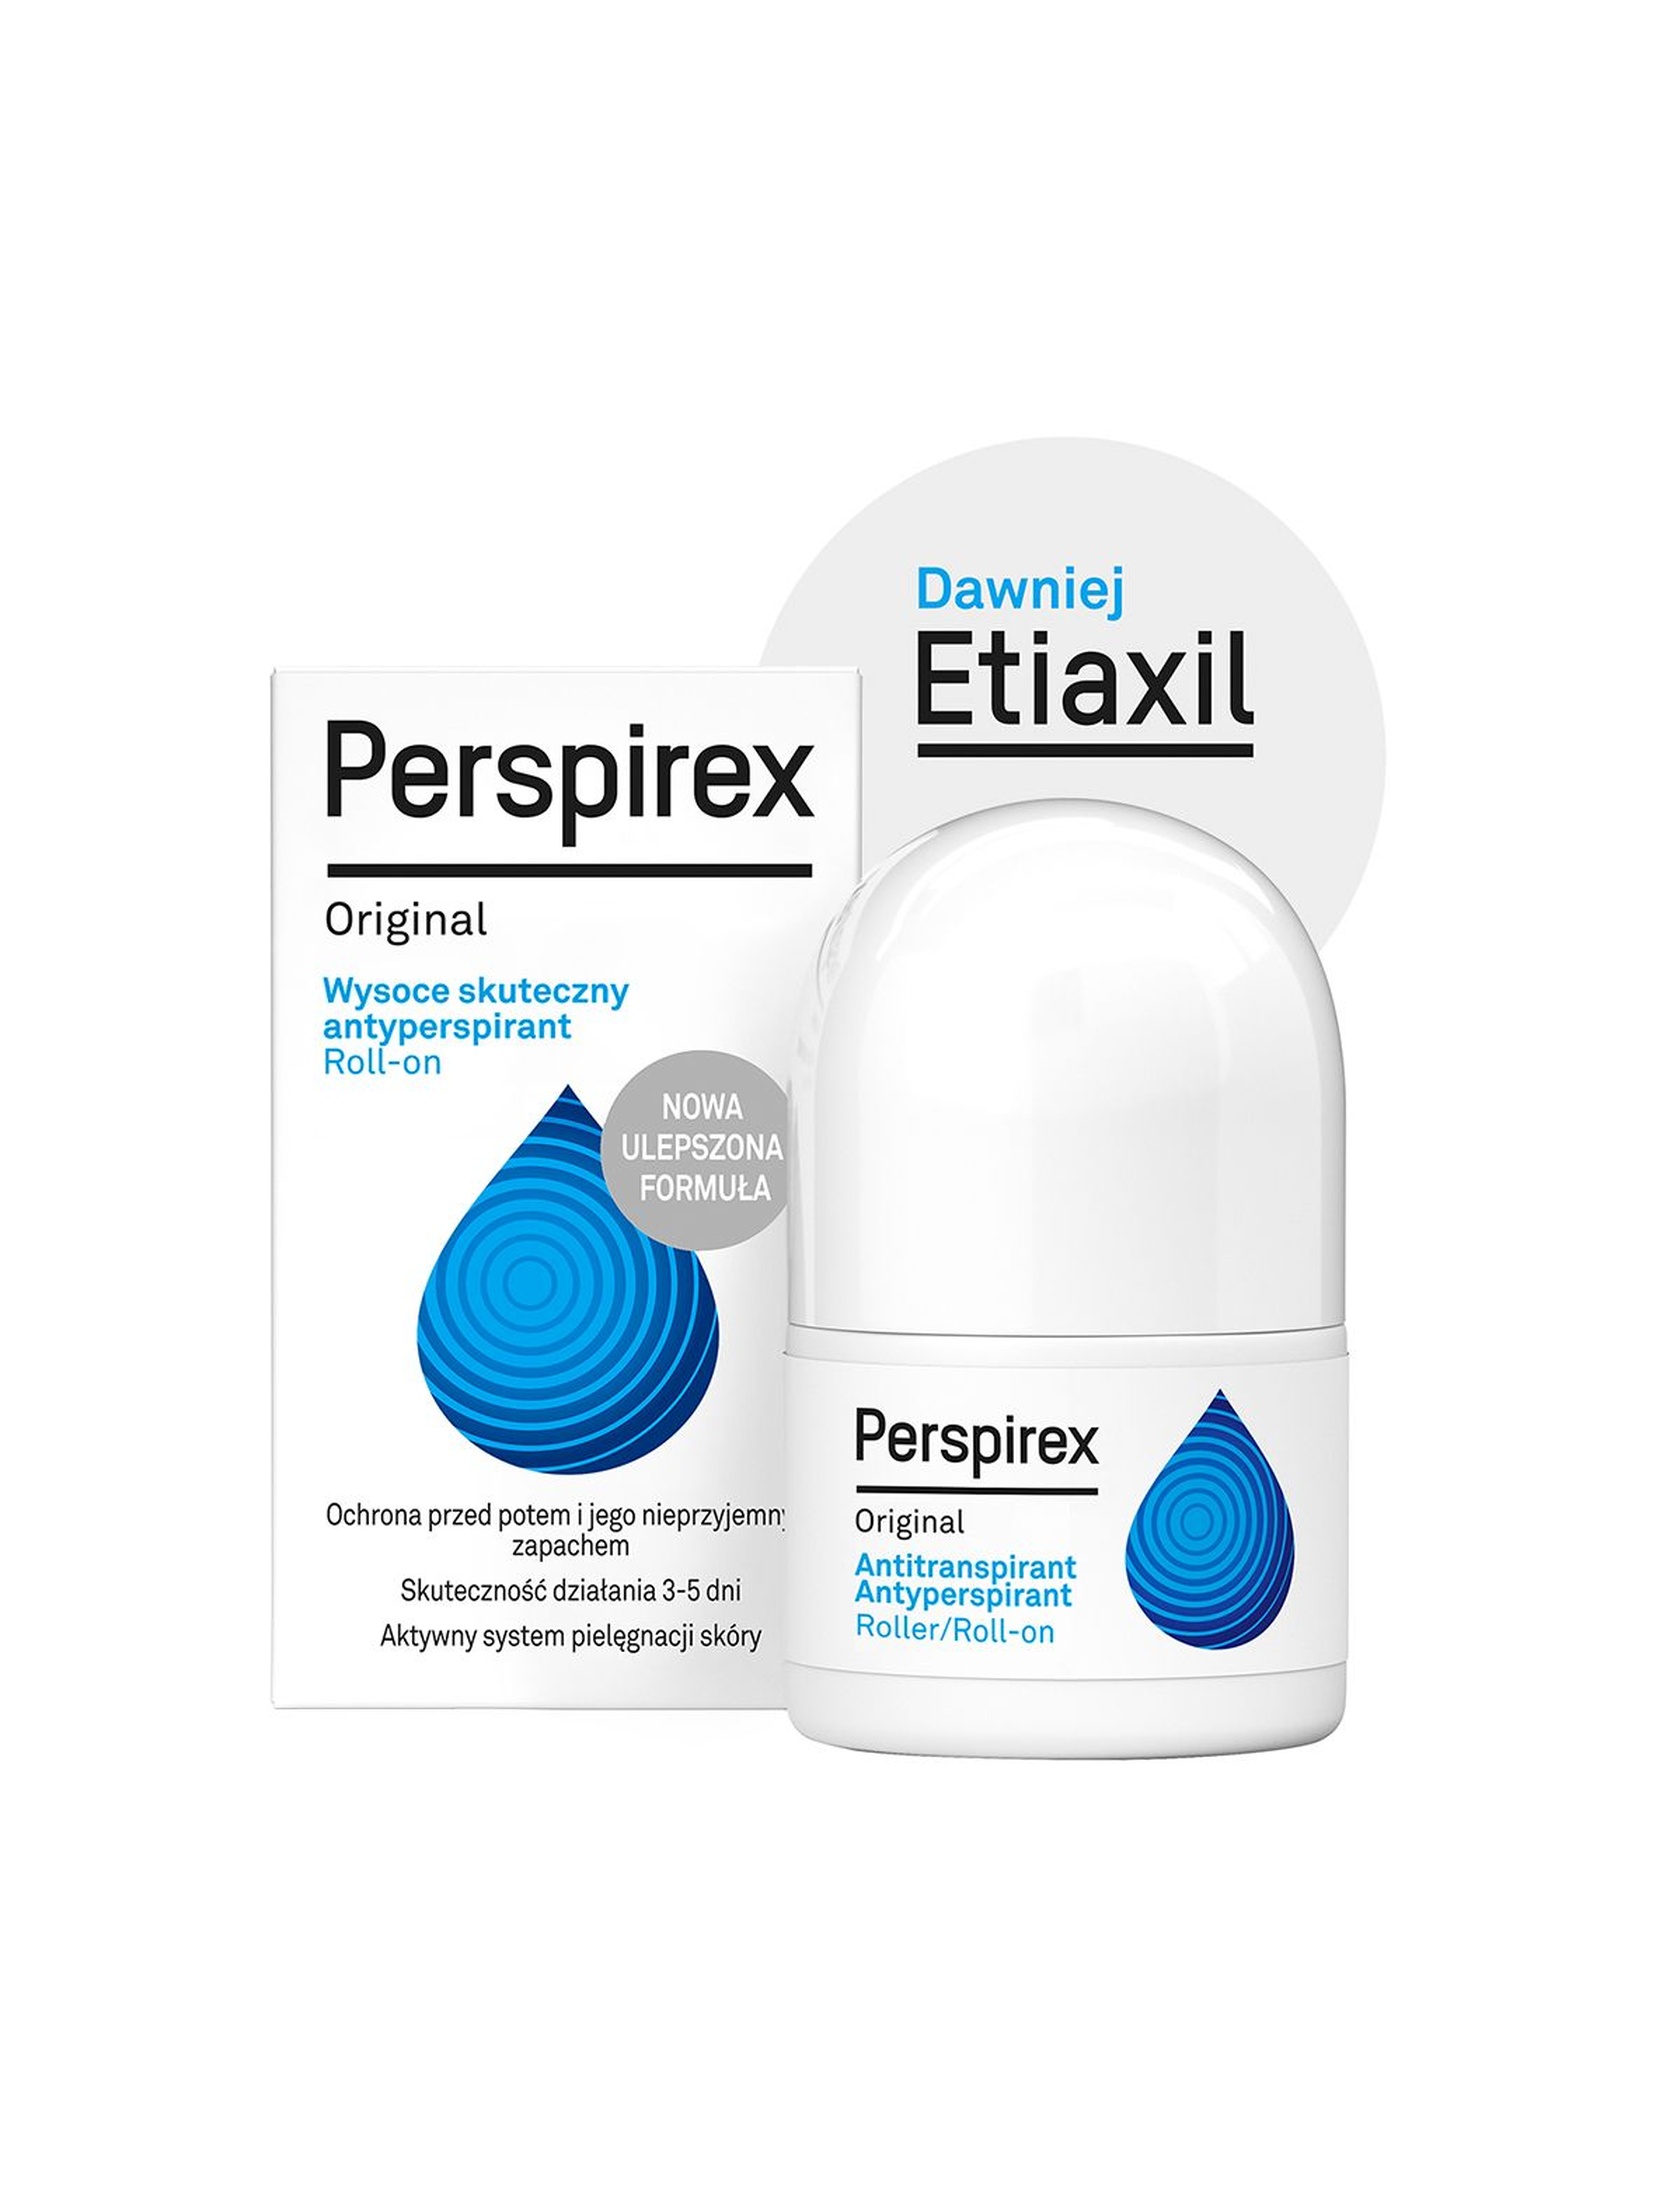 PERSPIREX Antyperspirant Original 20 ml